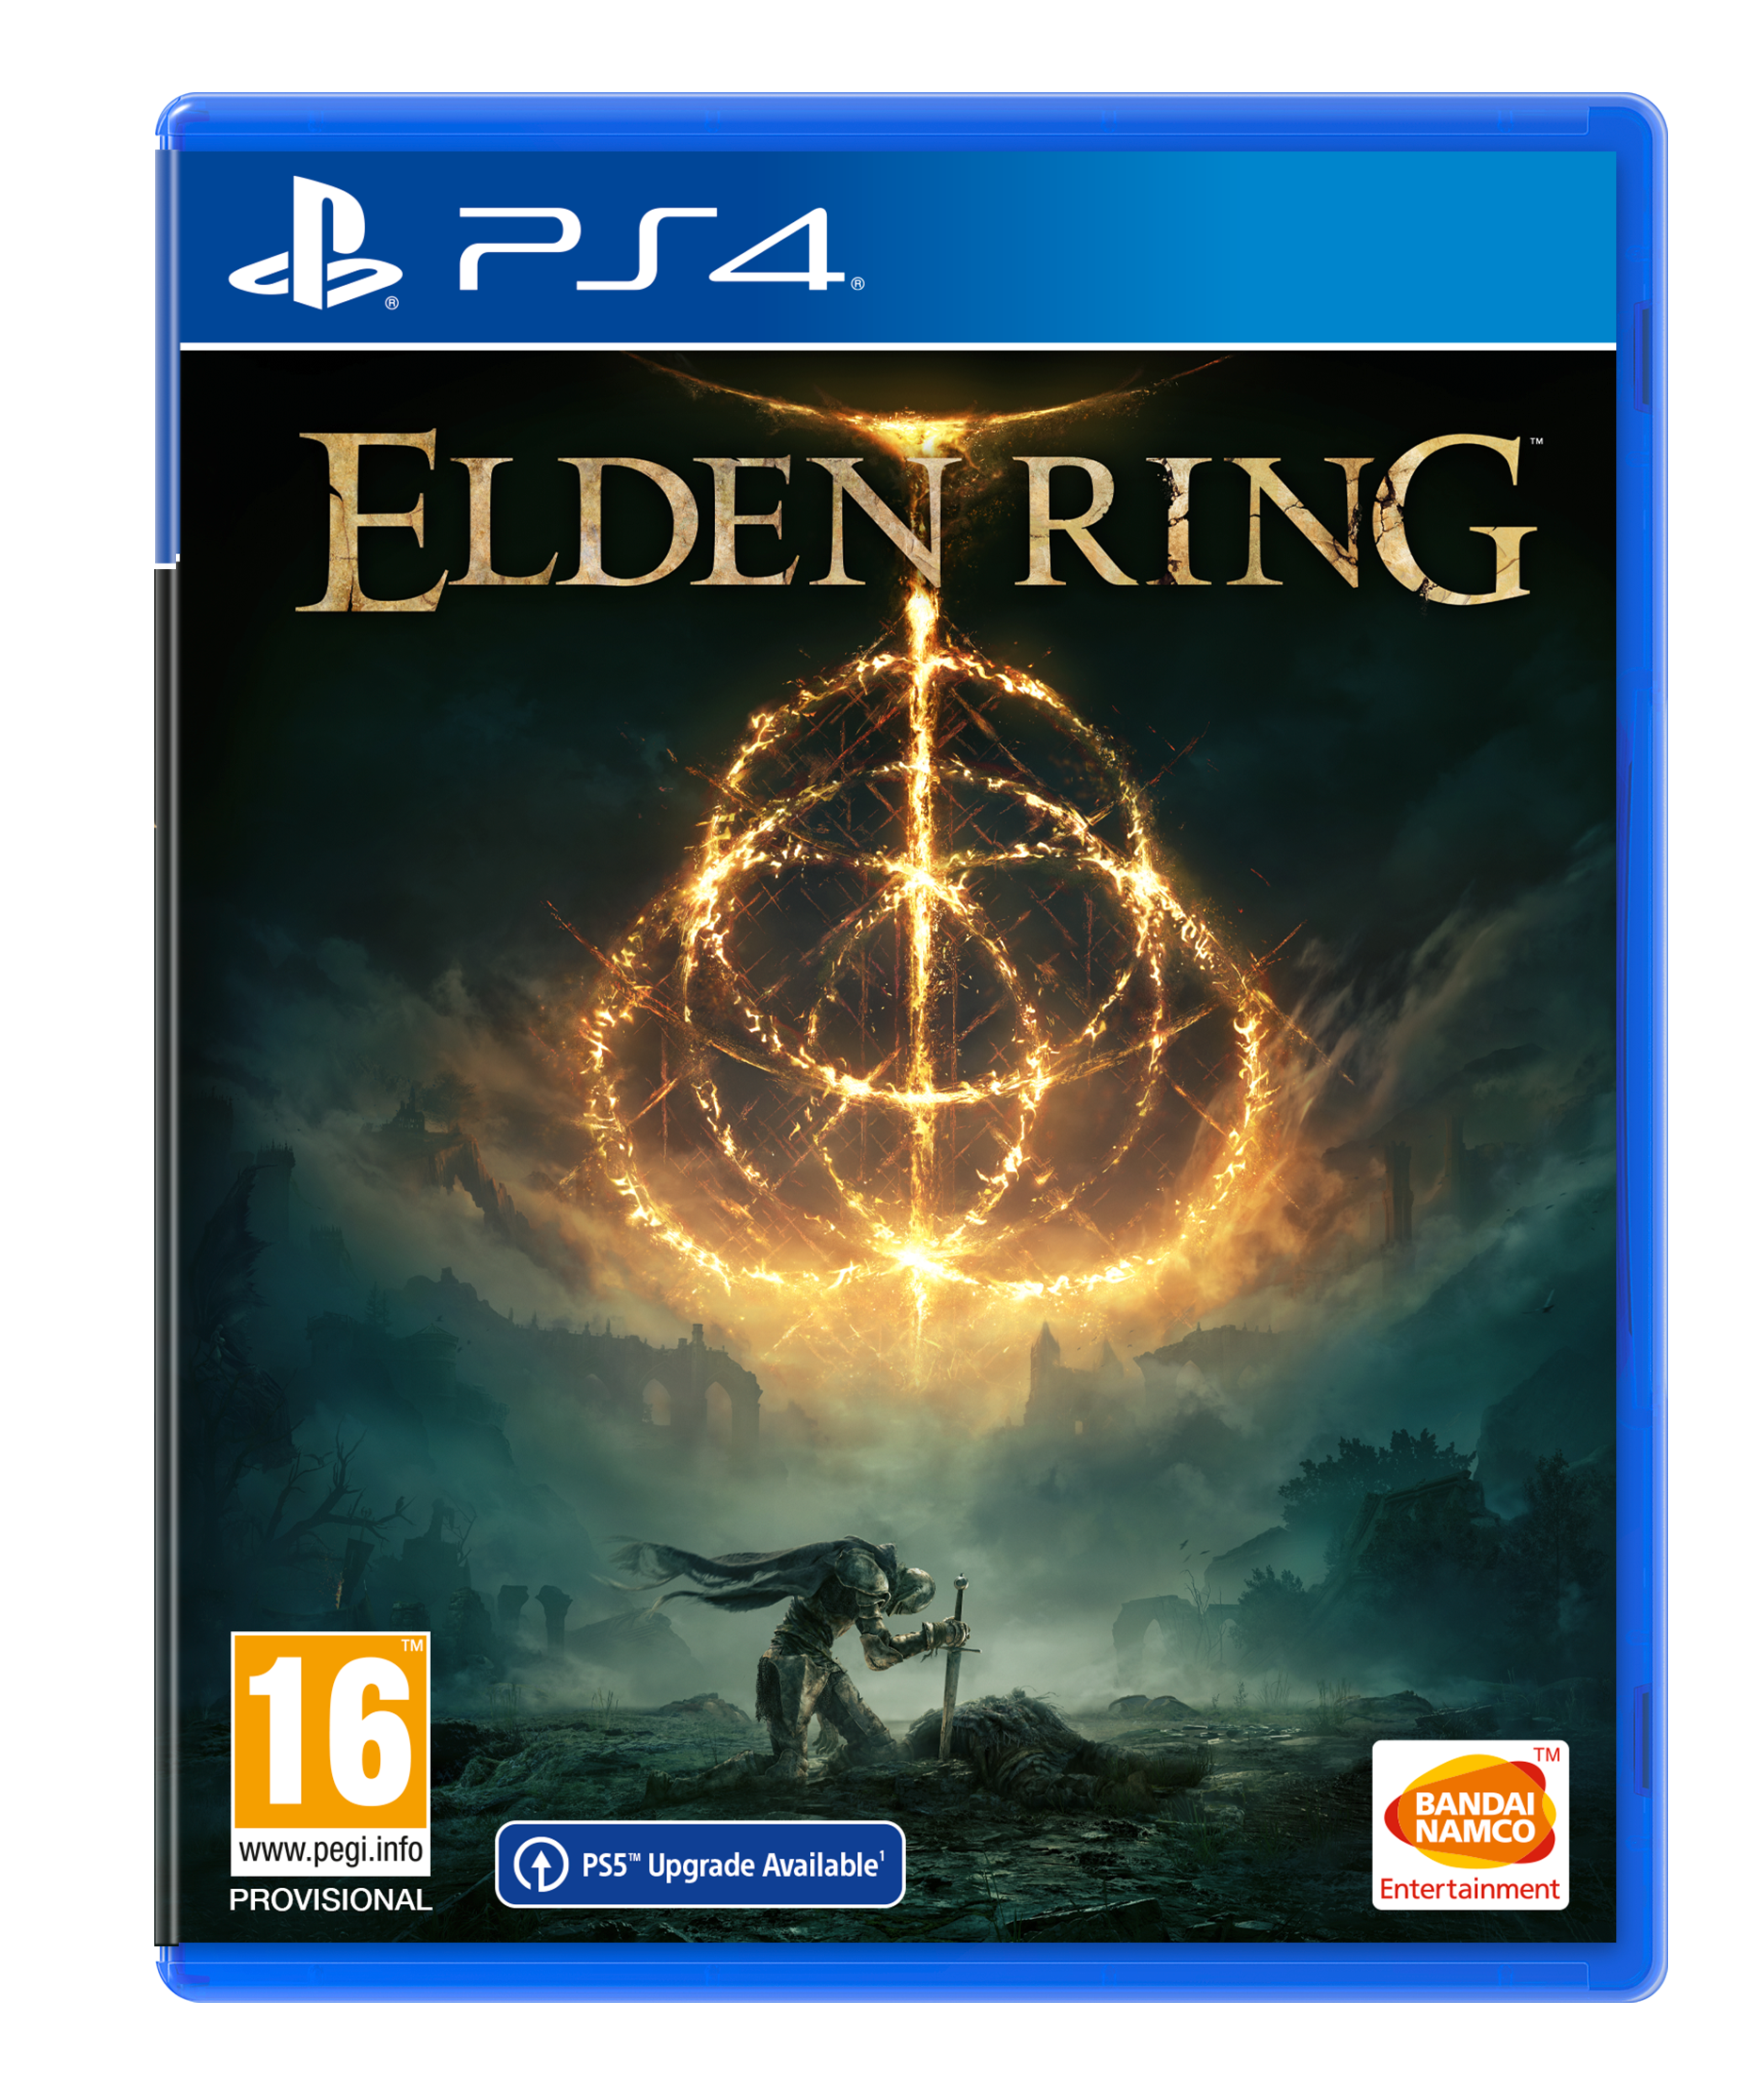 Buy Elden Ring - PlayStation 4 - Standard - English - Free shipping